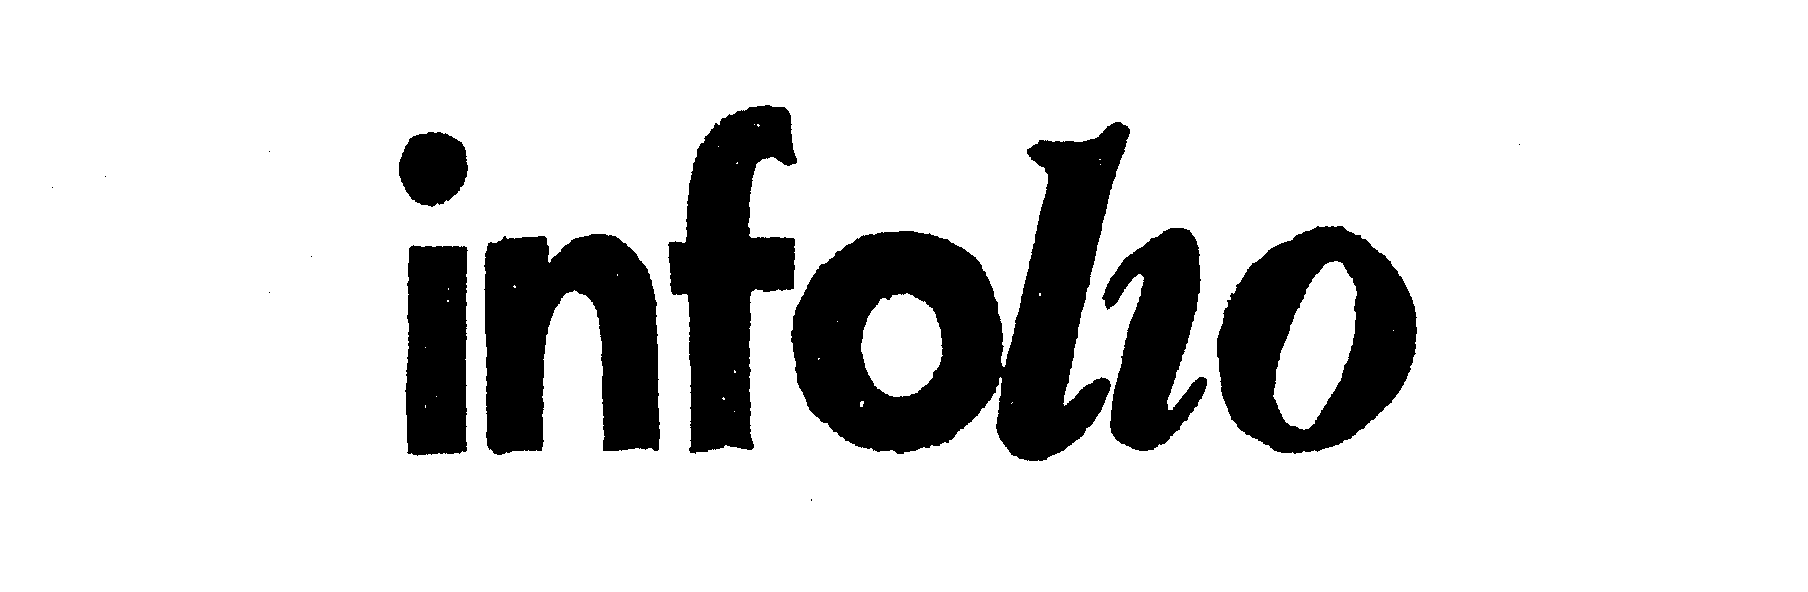 Trademark Logo INFOLIO